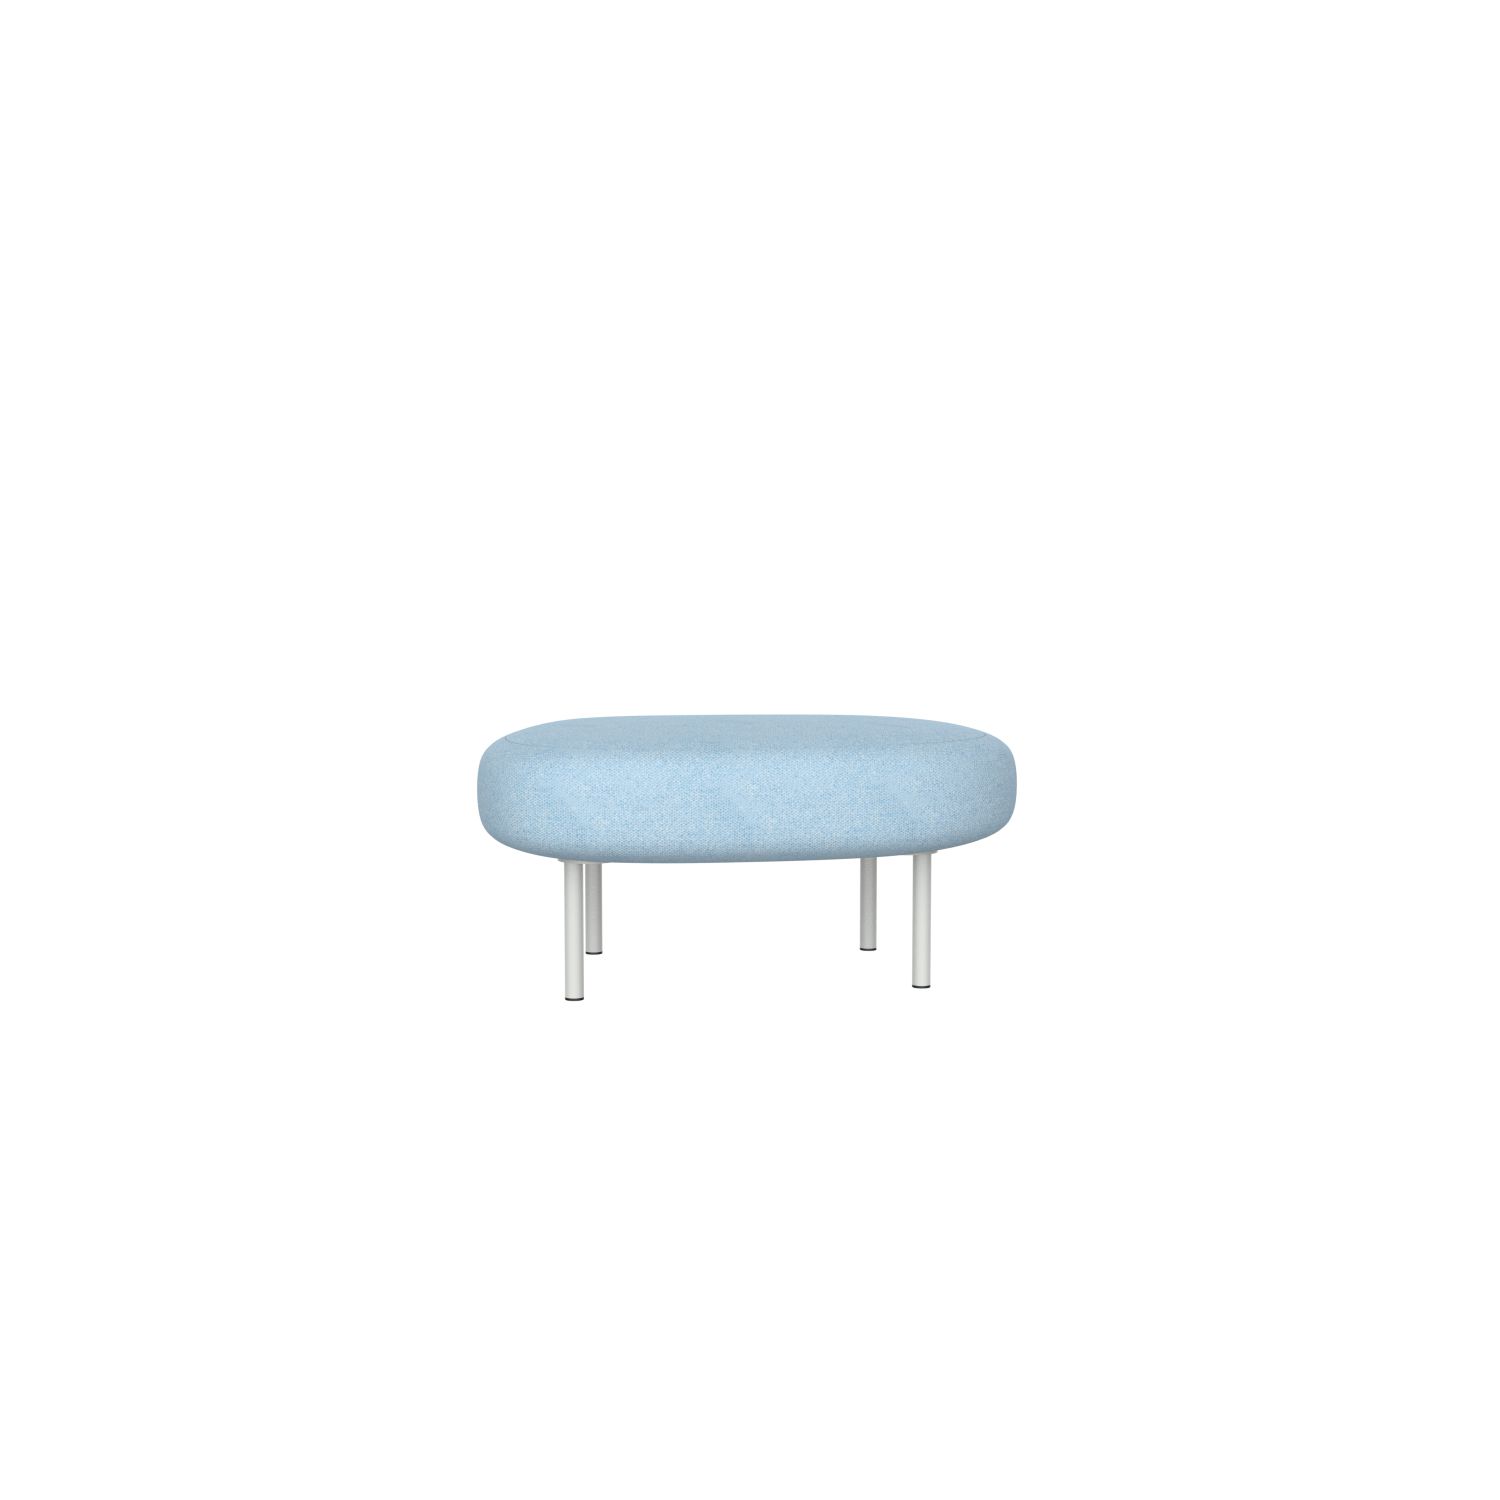 lensvelt studio stefan scholten sofa ottoman 90x70 cm middle lounge part moss pastel blue 40 frame light grey ral7035